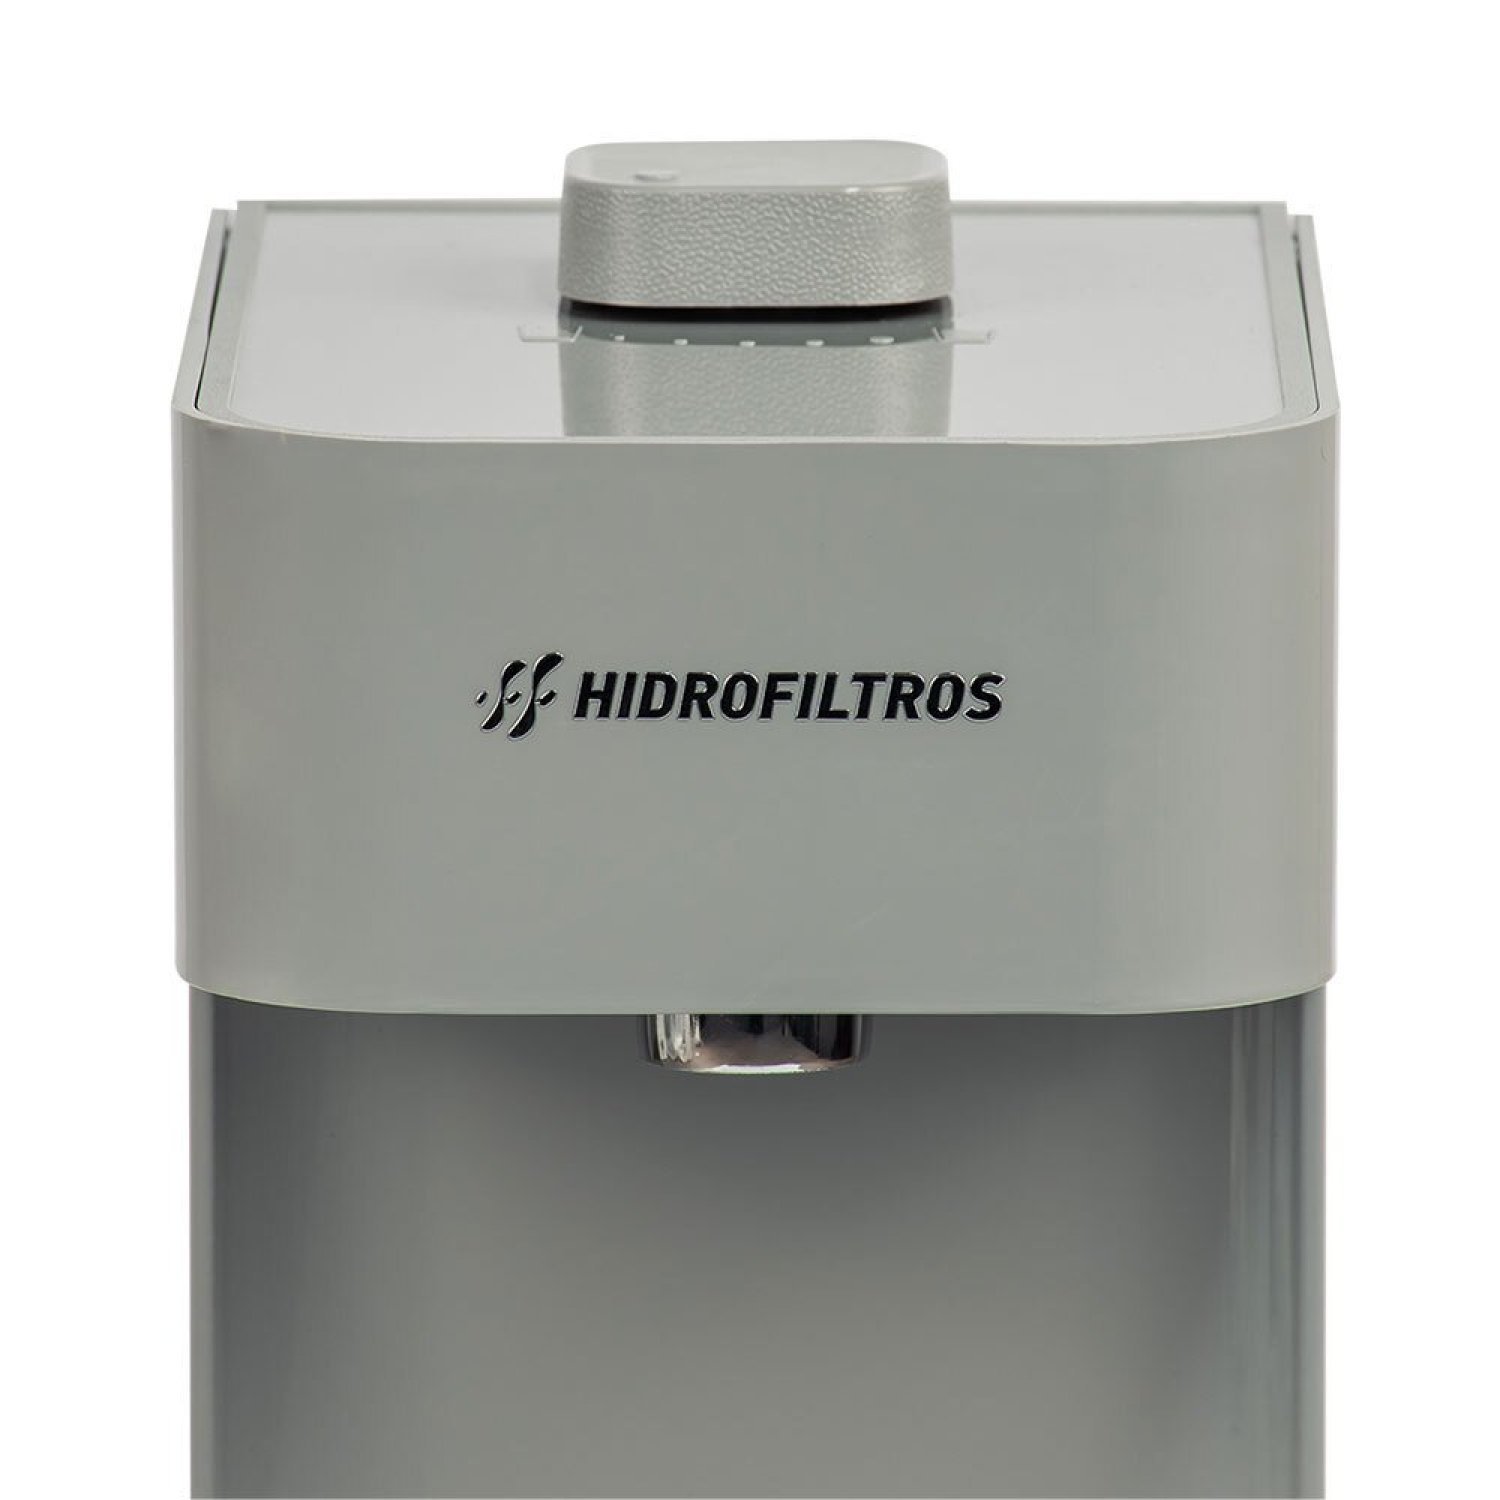 Purificador de Água Facile C3 Hidro Filtros - 2